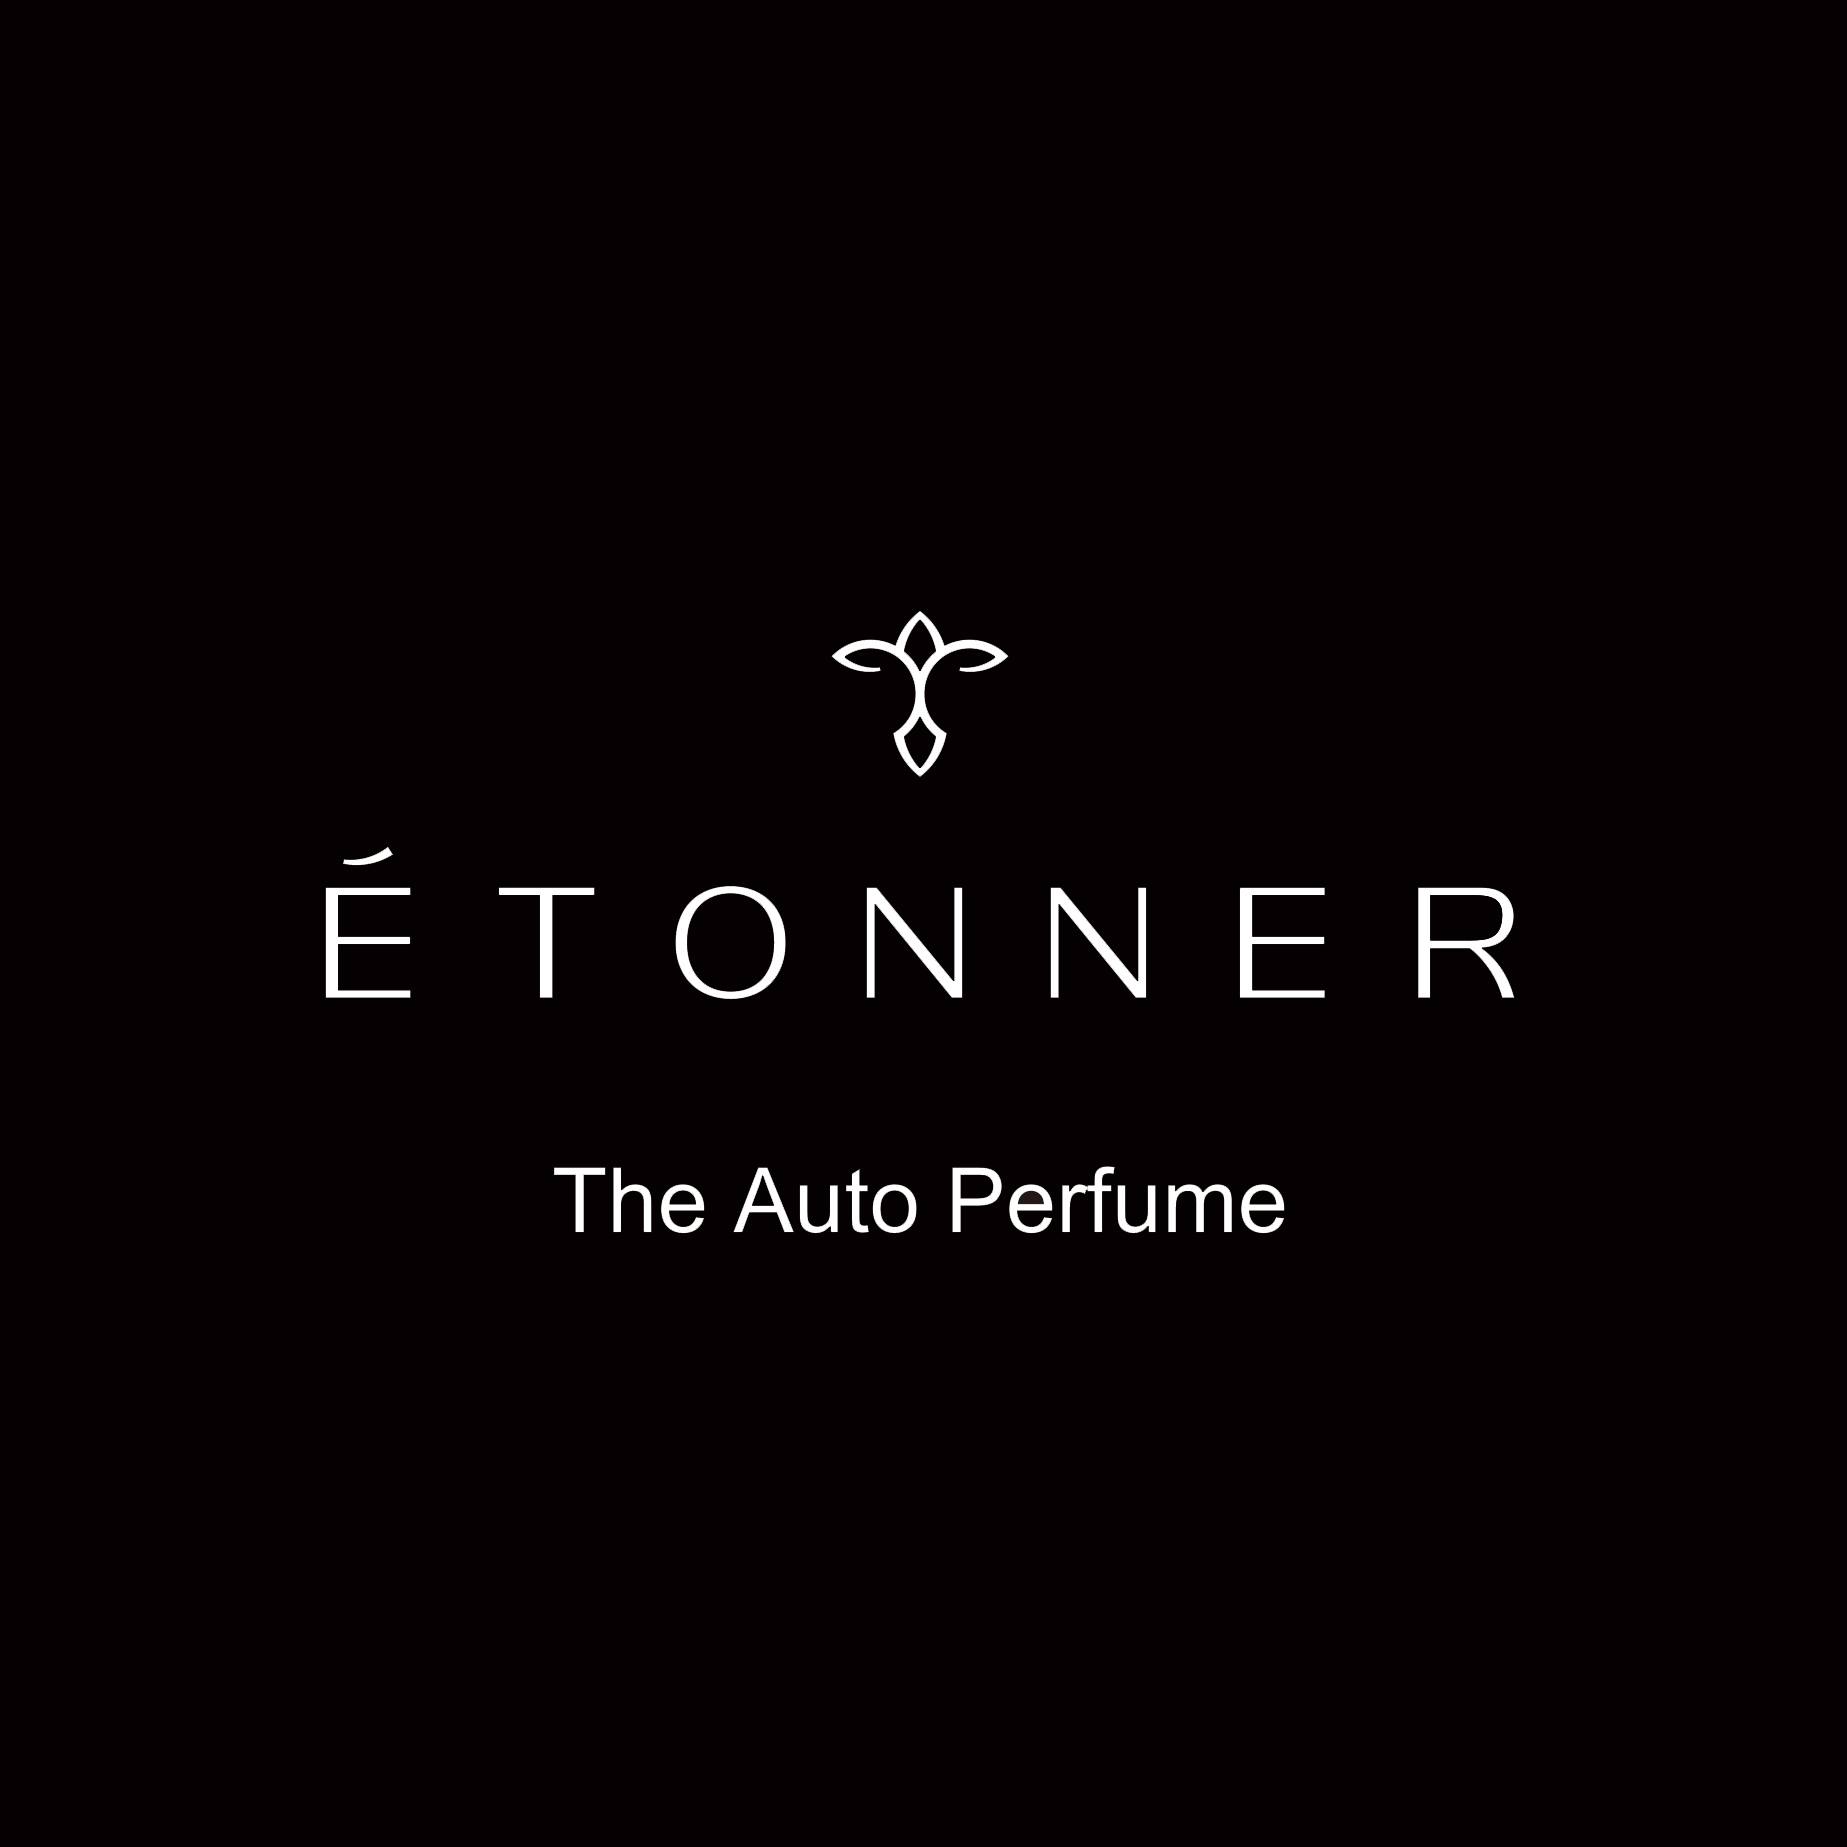 Etonner The Auto Perfume (自動車用香水)